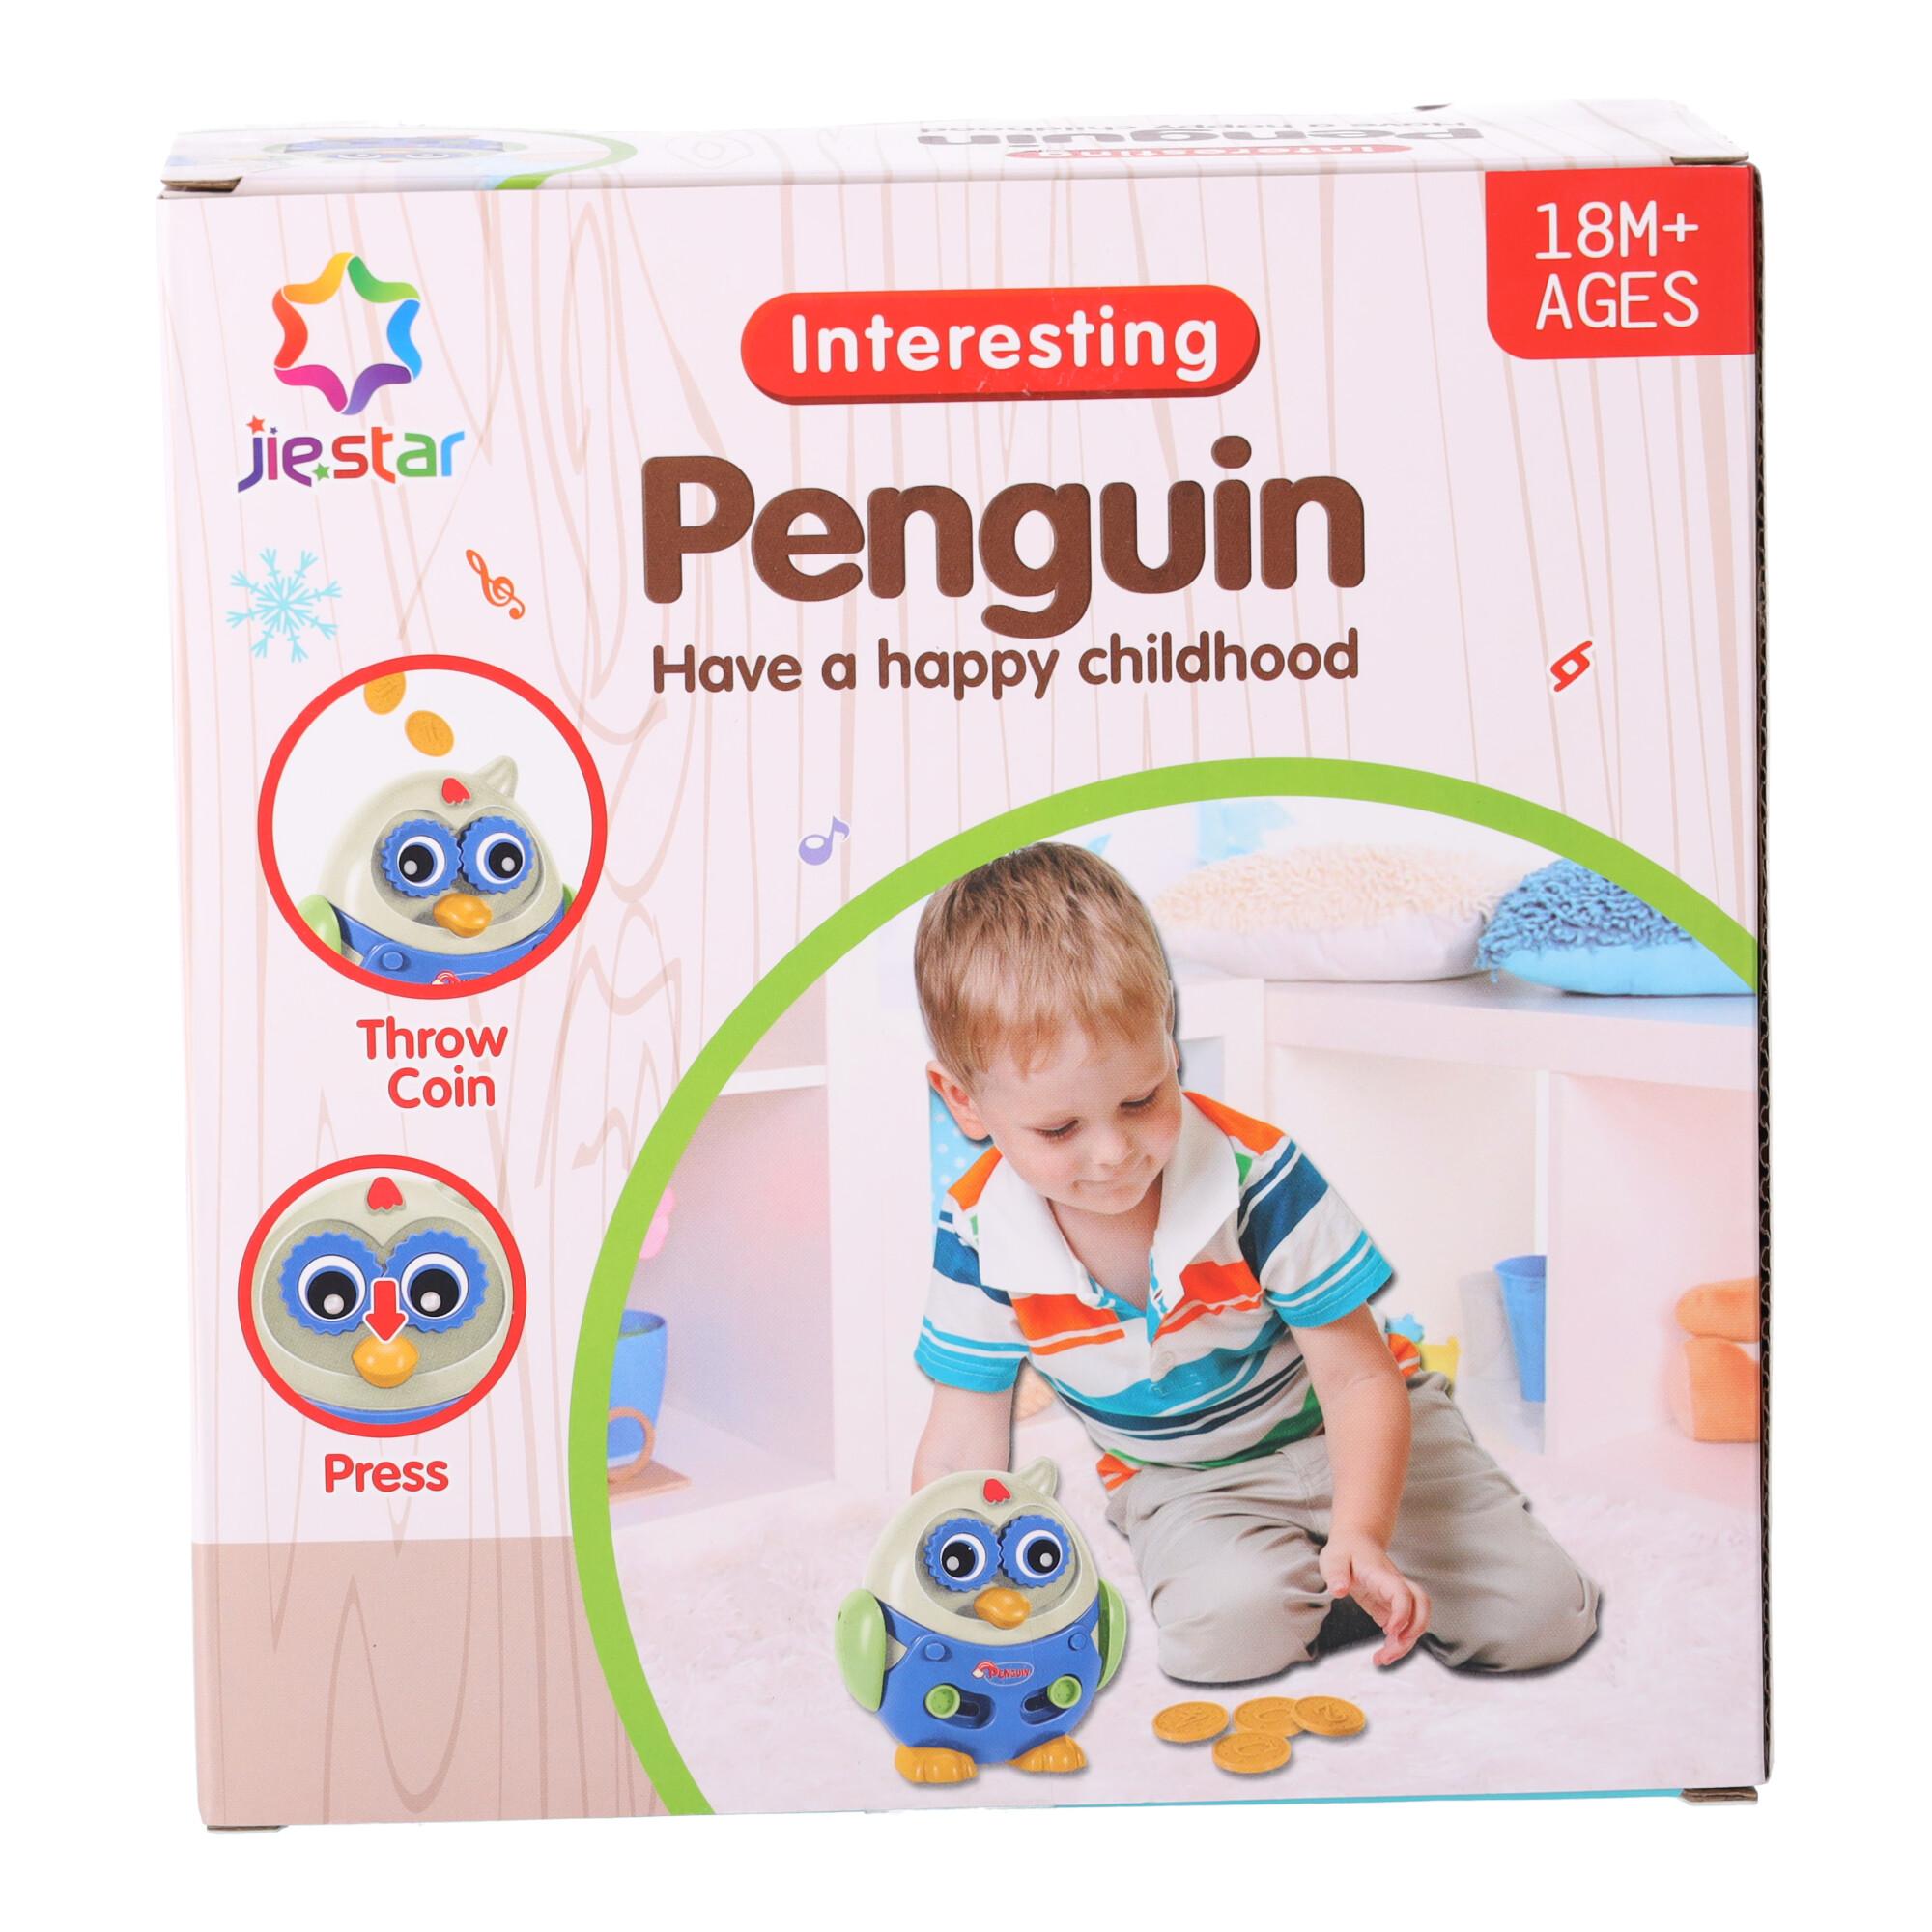 Penguin set toy-model